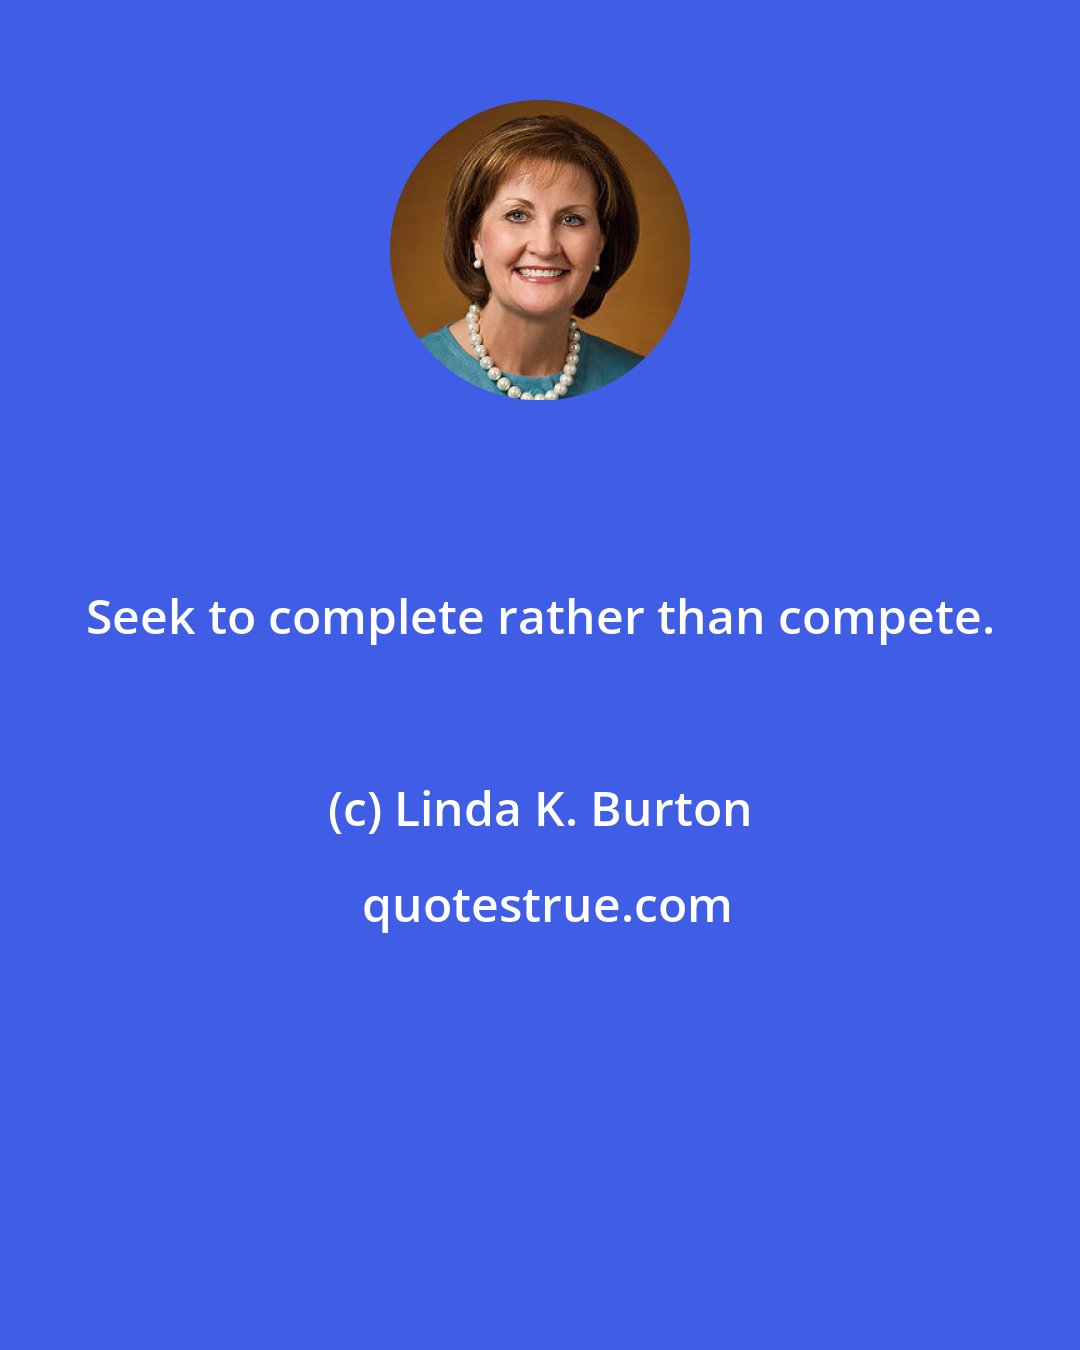 Linda K. Burton: Seek to complete rather than compete.